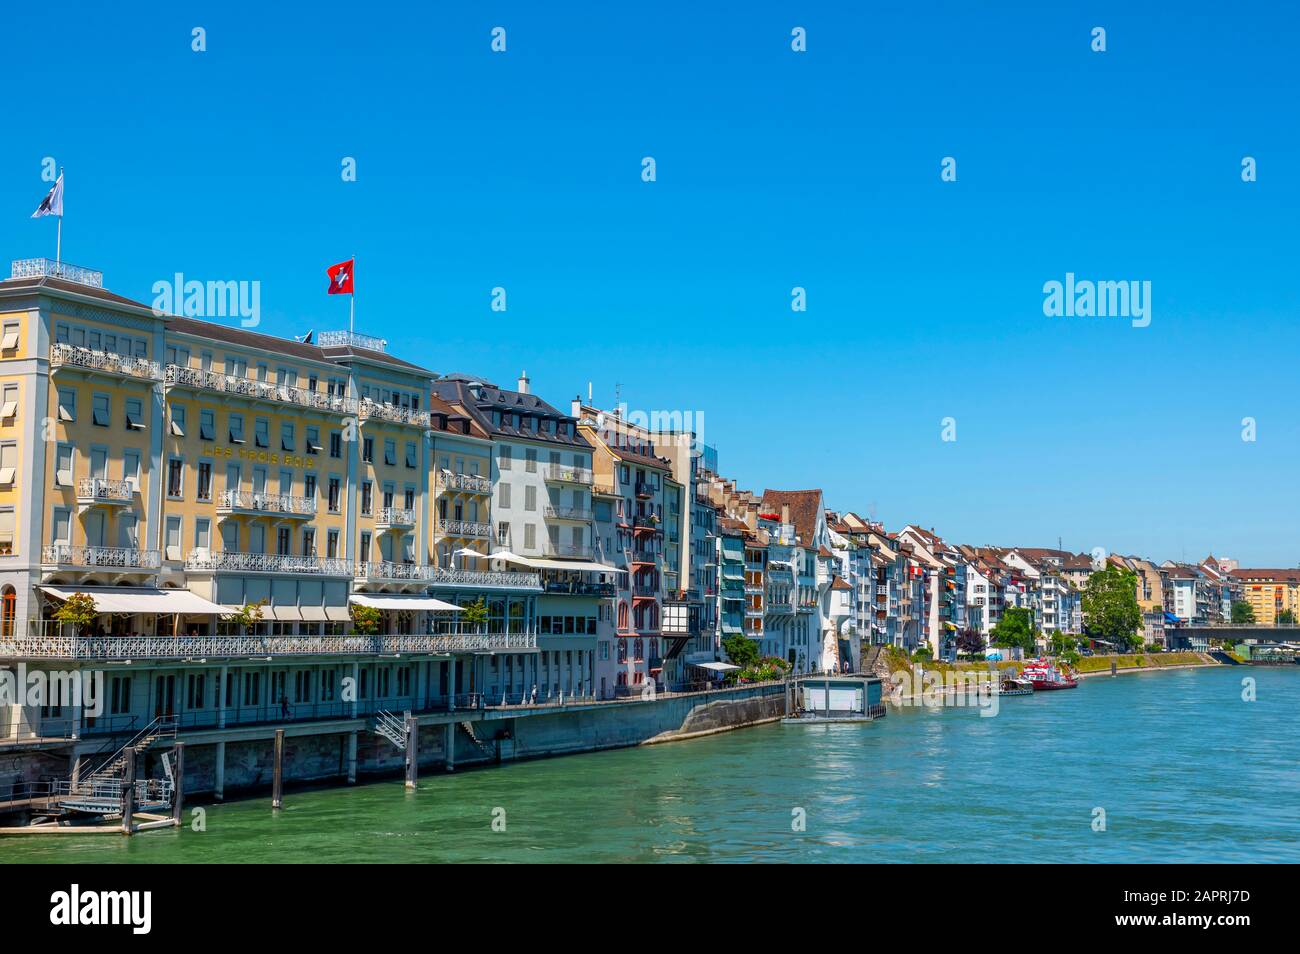 5 Sterne, Luxushotel am Rhein; Basel, Basel Stadt, Schweiz Stockfotografie  - Alamy